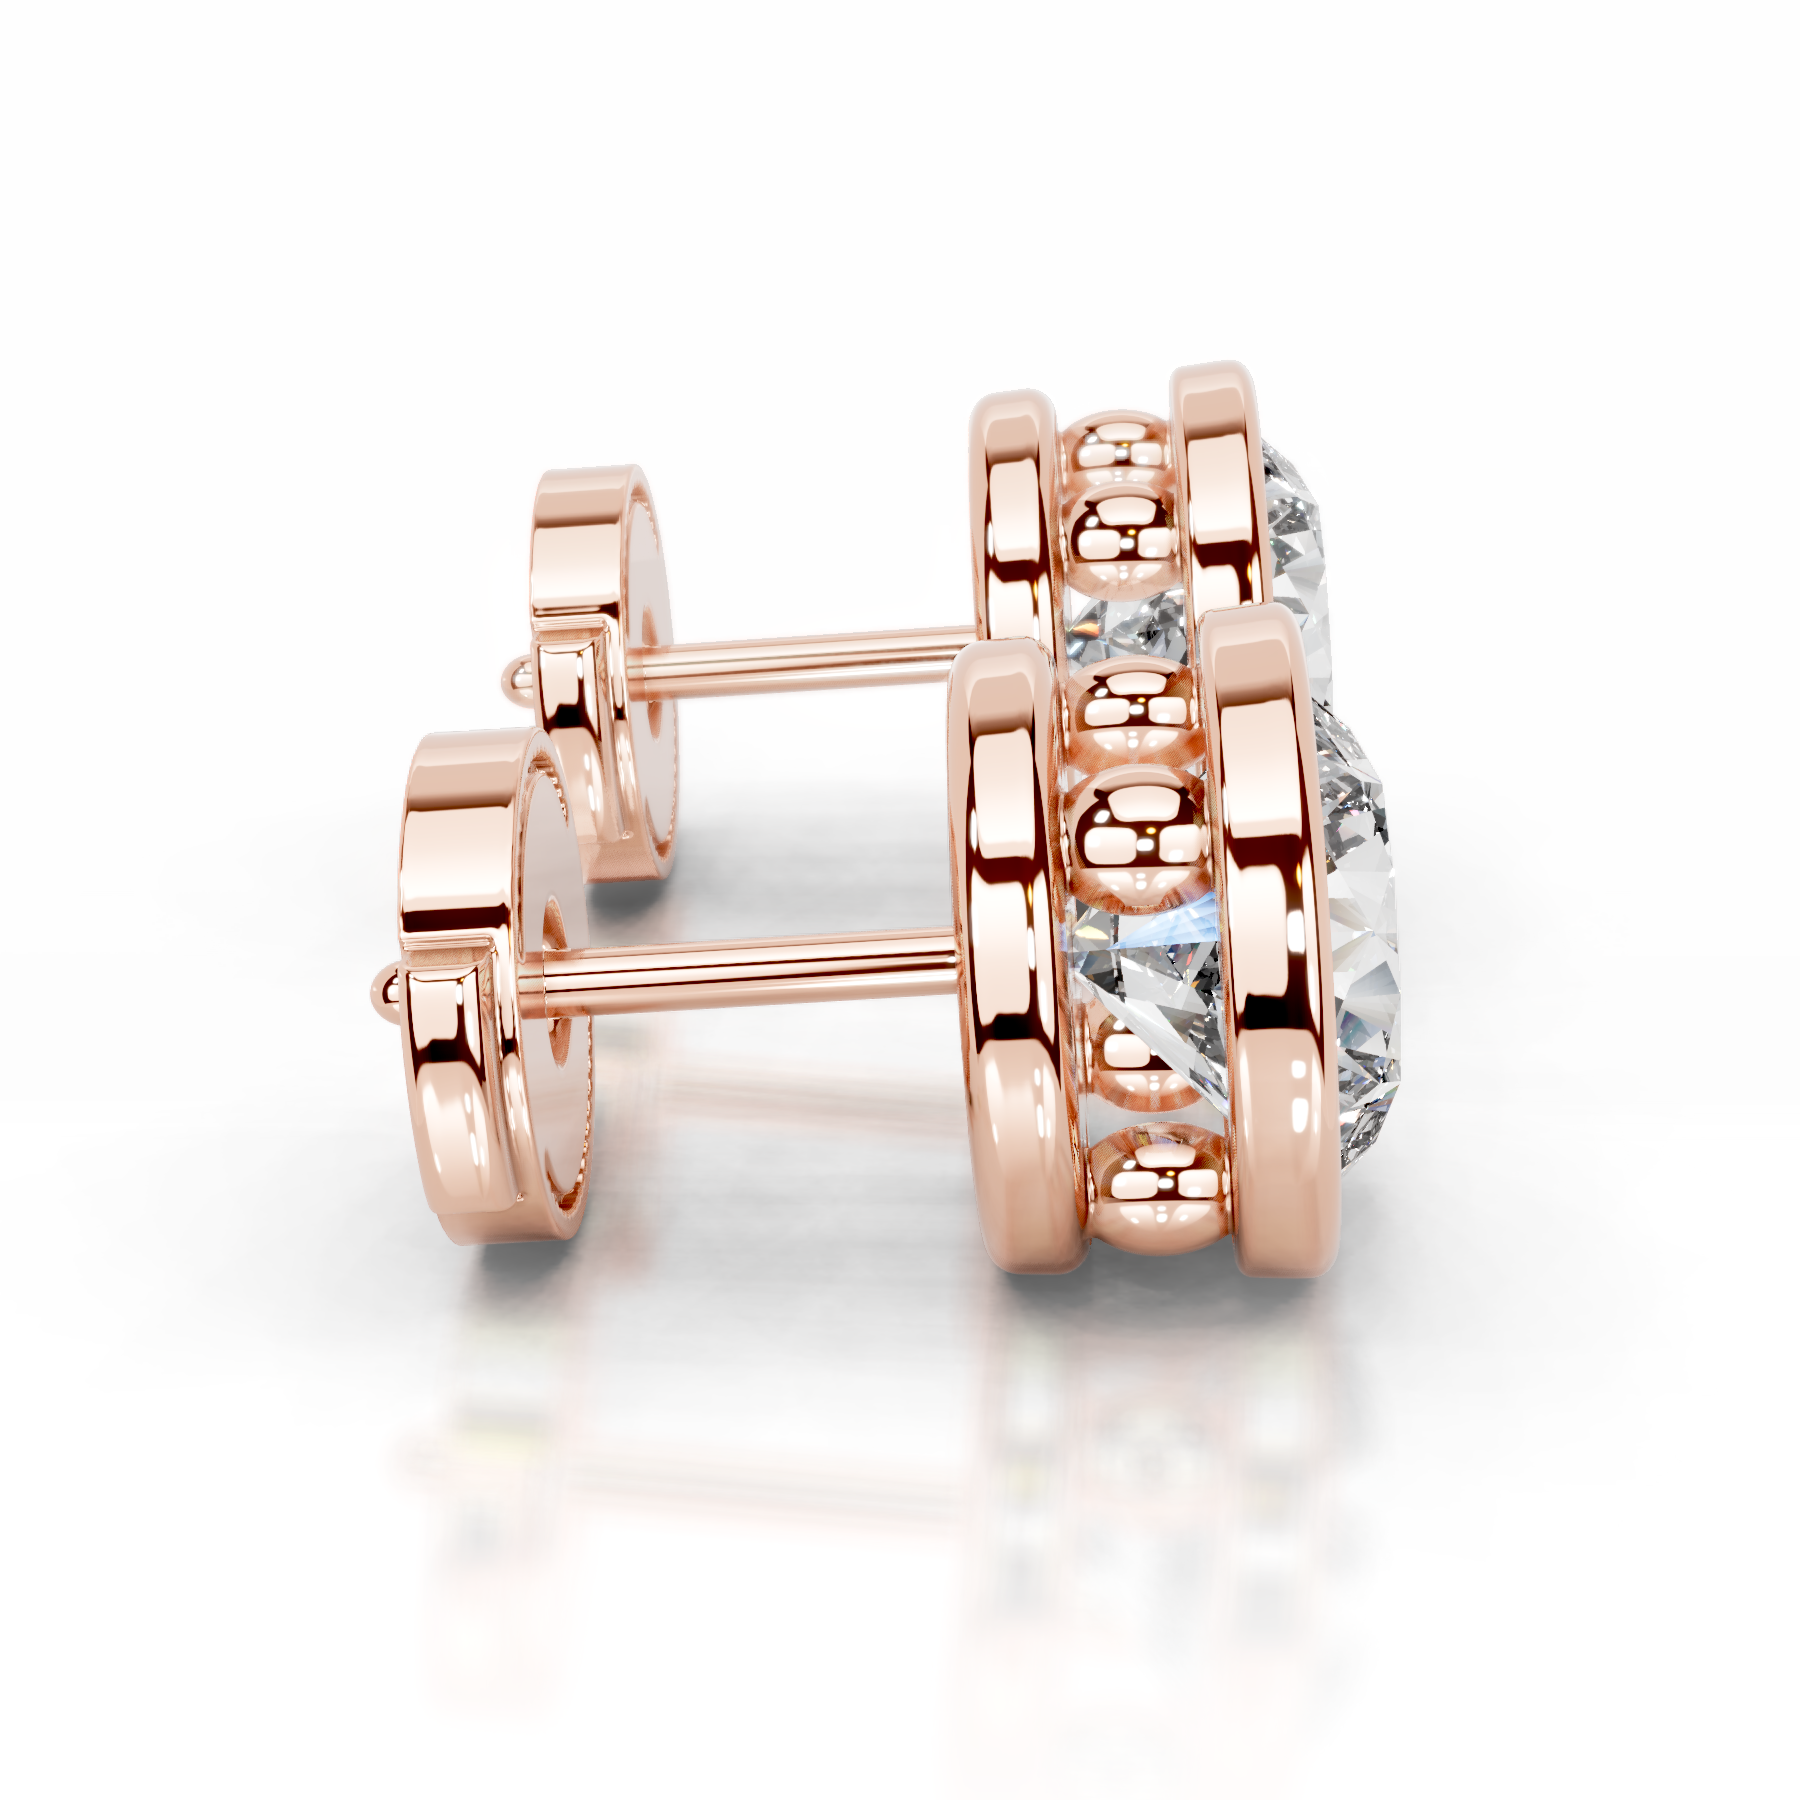 Amber Diamond Earrings   (3 Carat) -14K Rose Gold